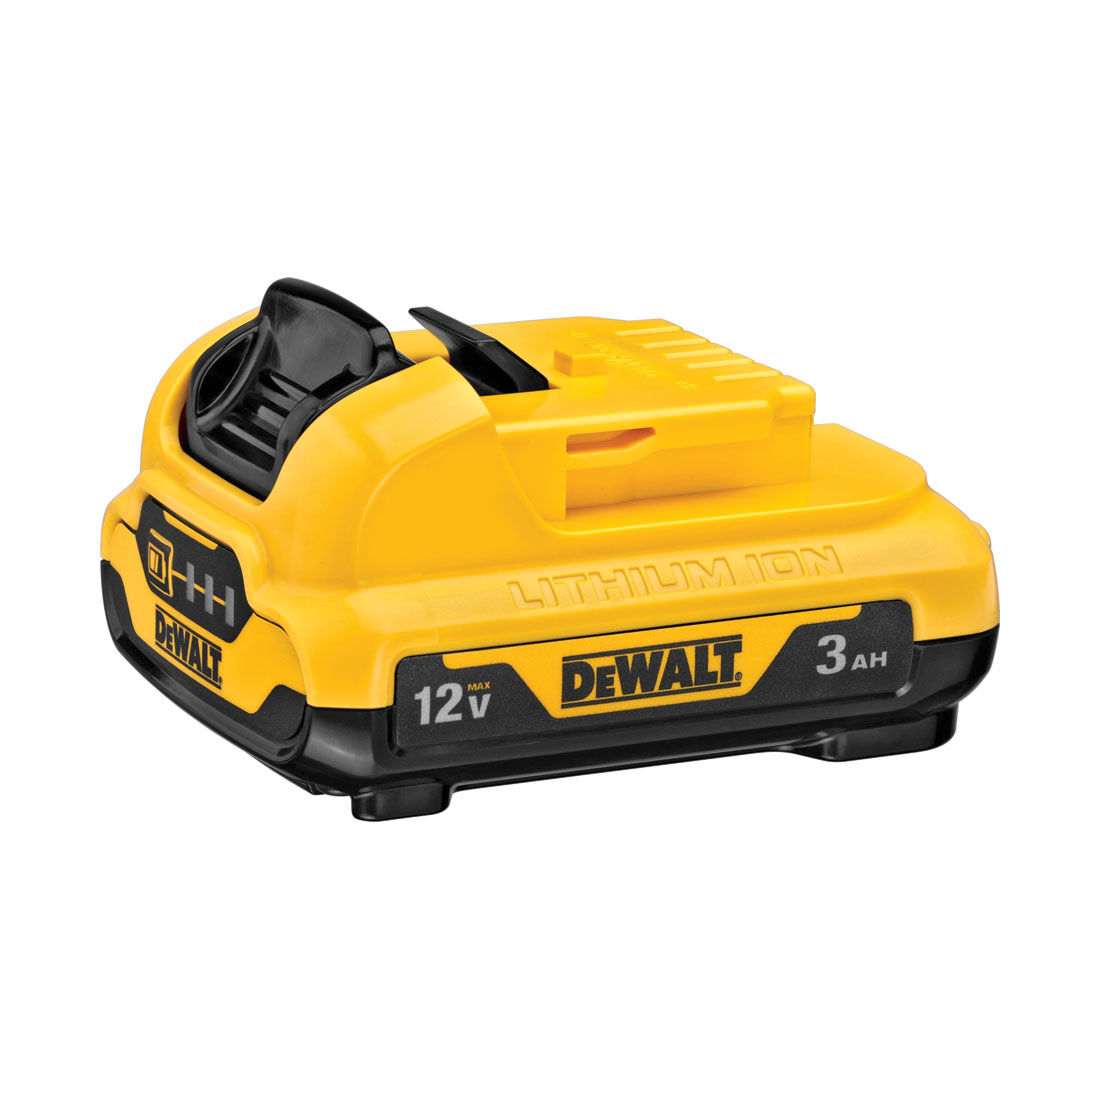 DeWALT XR 12V Brushless 2 Piece Sub Compact Drill & Driver Kit 3.0Ah, , scaau_hi-res